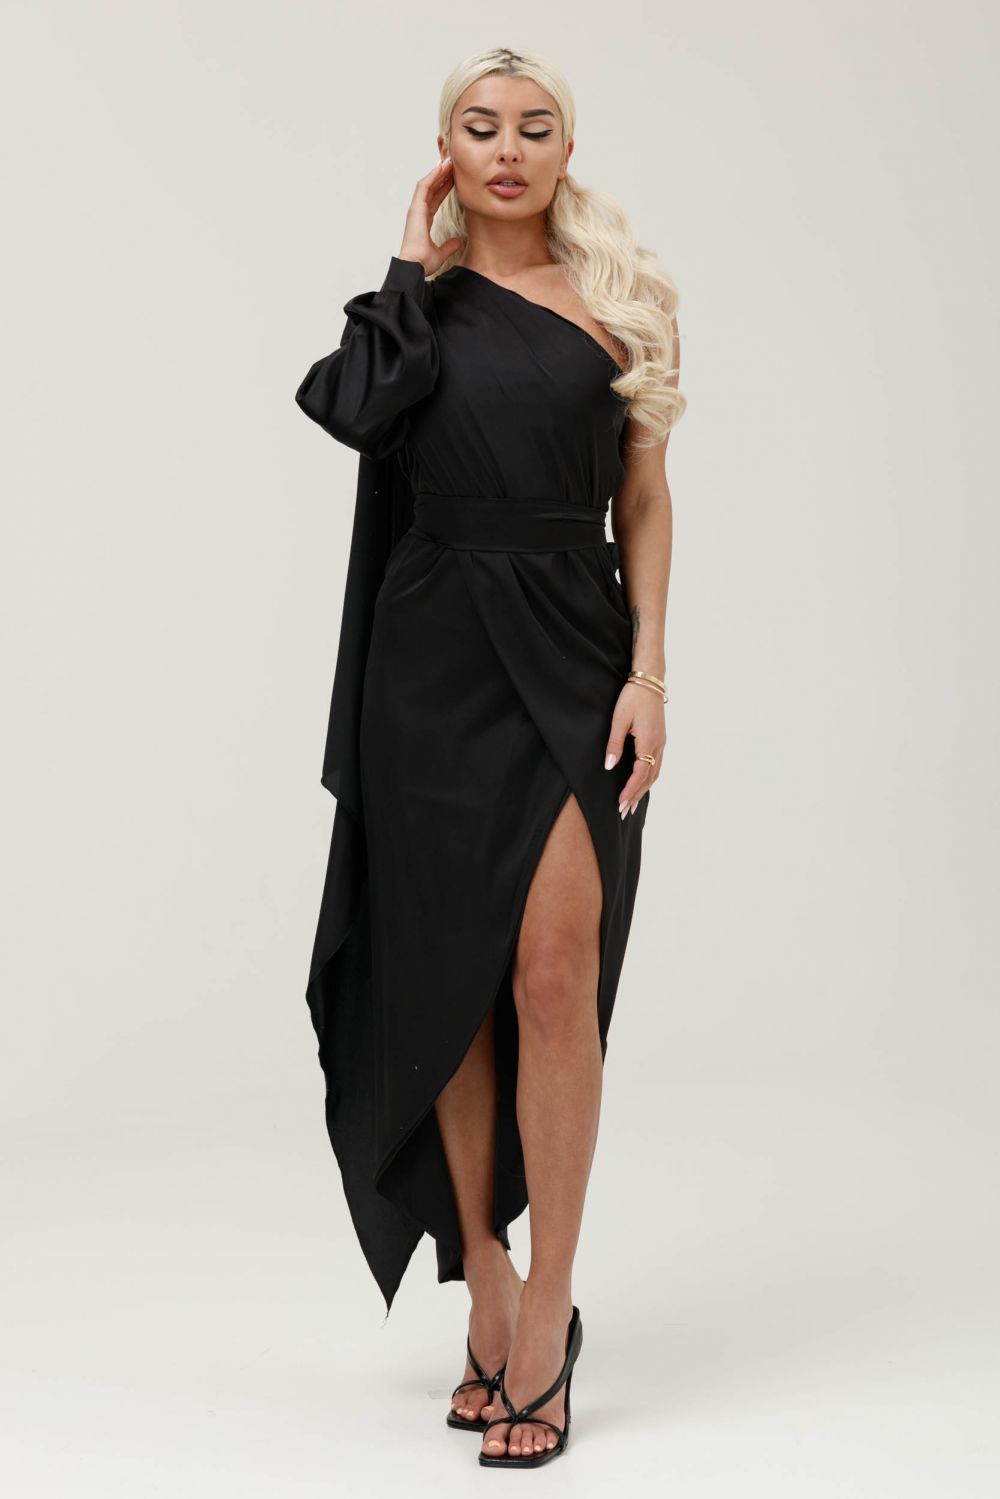 Long black satin veil dress for women by Standy Bogas